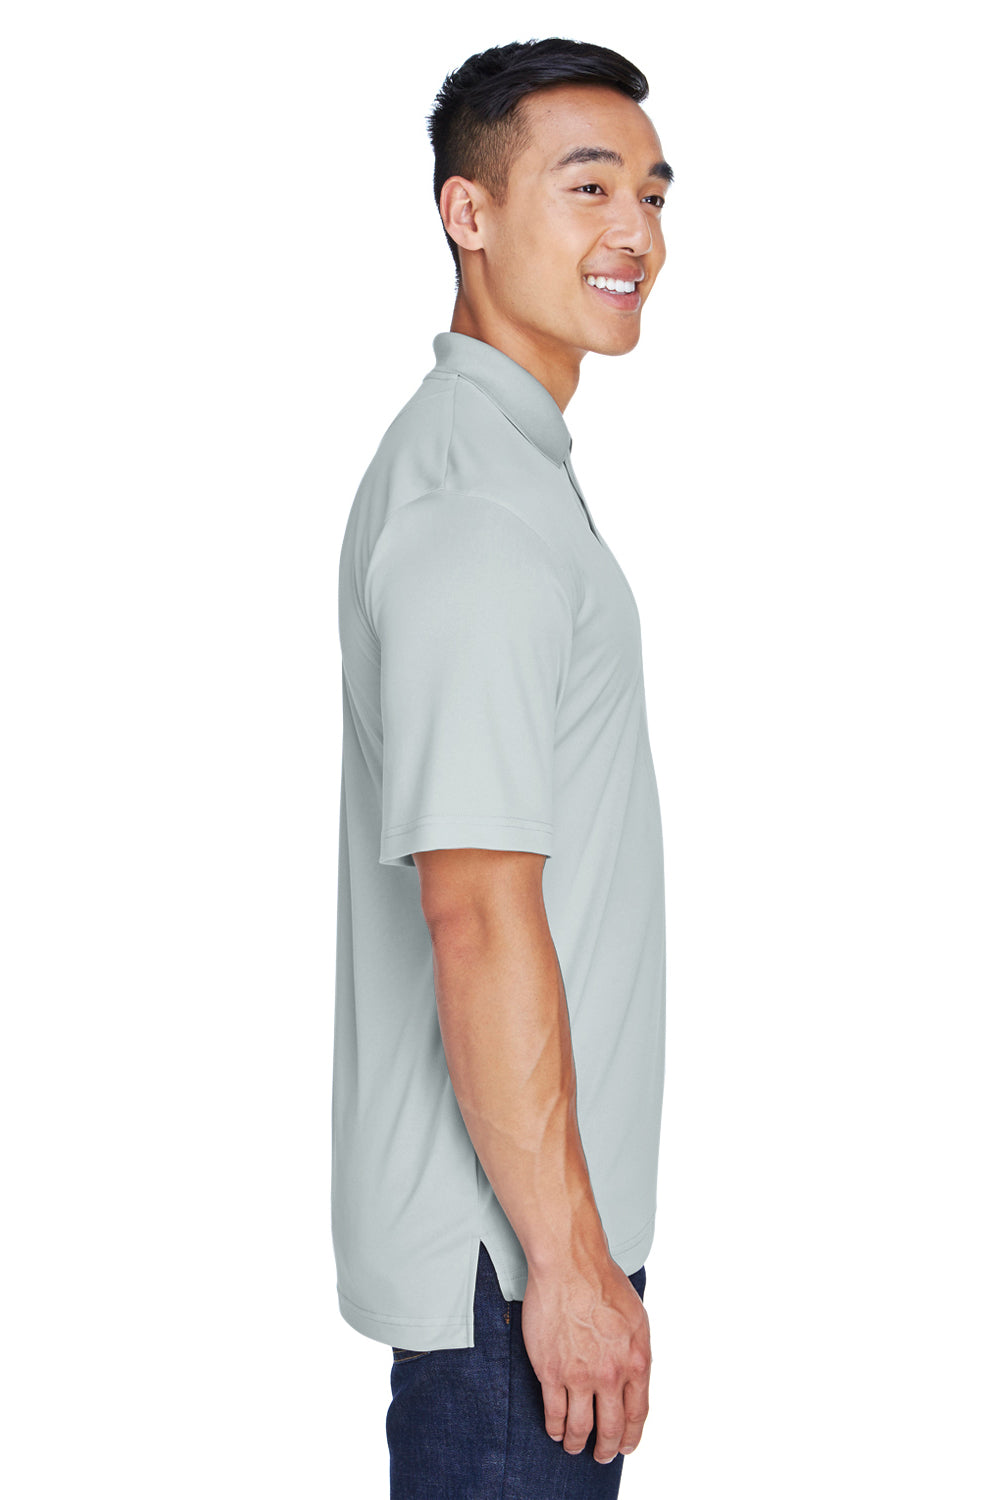 UltraClub 8405 Mens Cool & Dry Moisture Wicking Short Sleeve Polo Shirt Grey Side